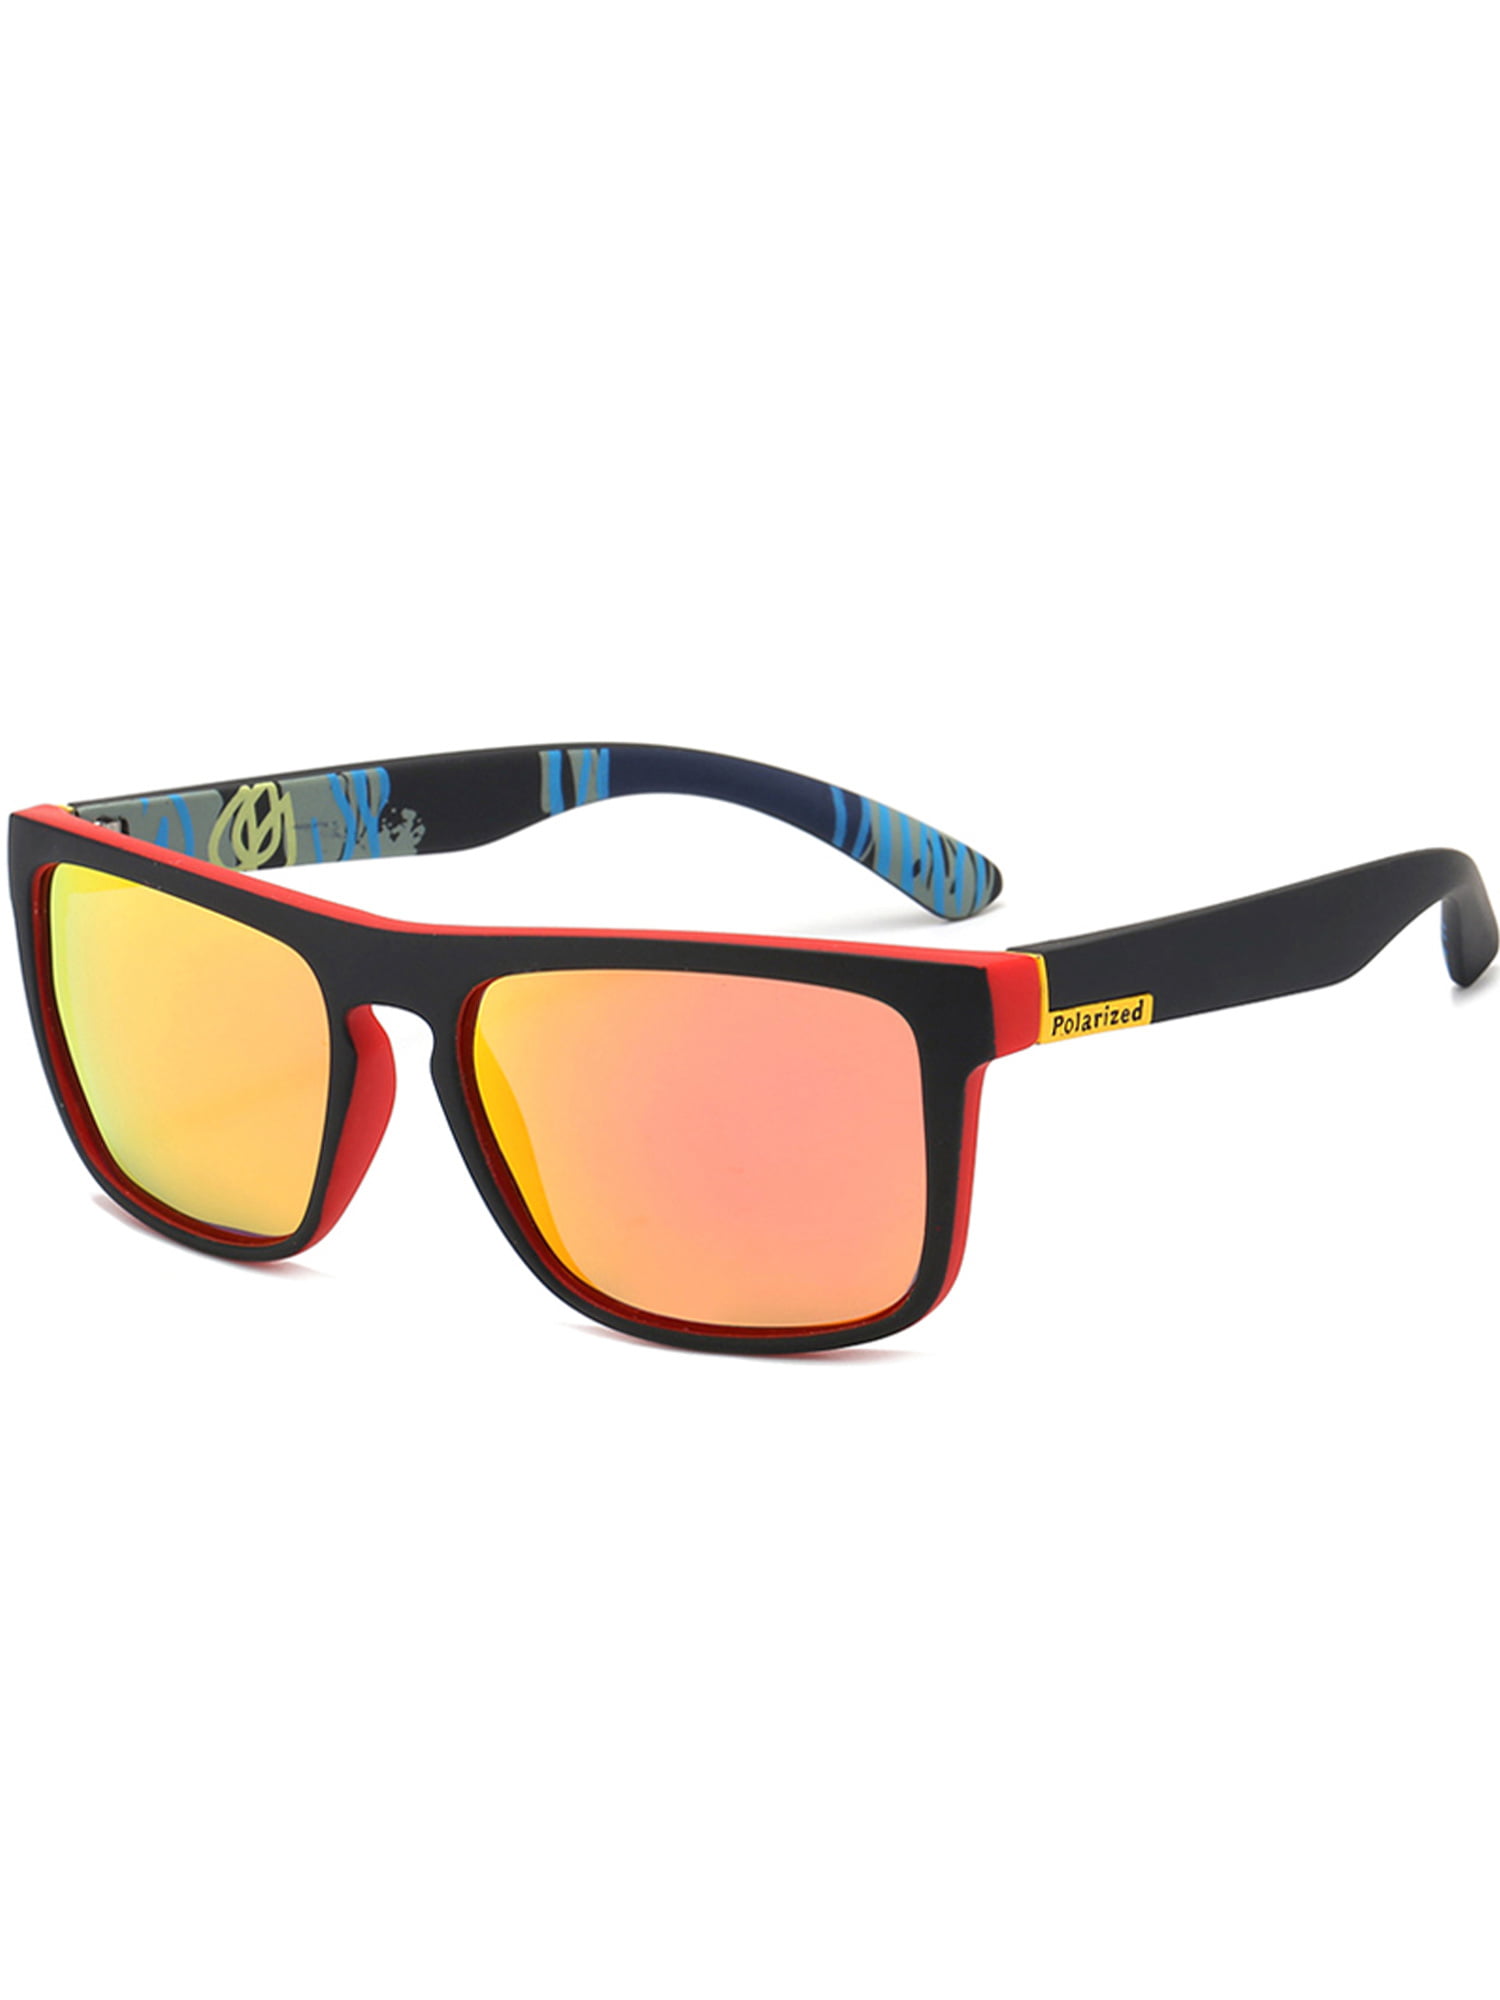 Polarized Square Sunglasses Men Women Mirror Lens UV400 Protection Driving Sun Glasses black 